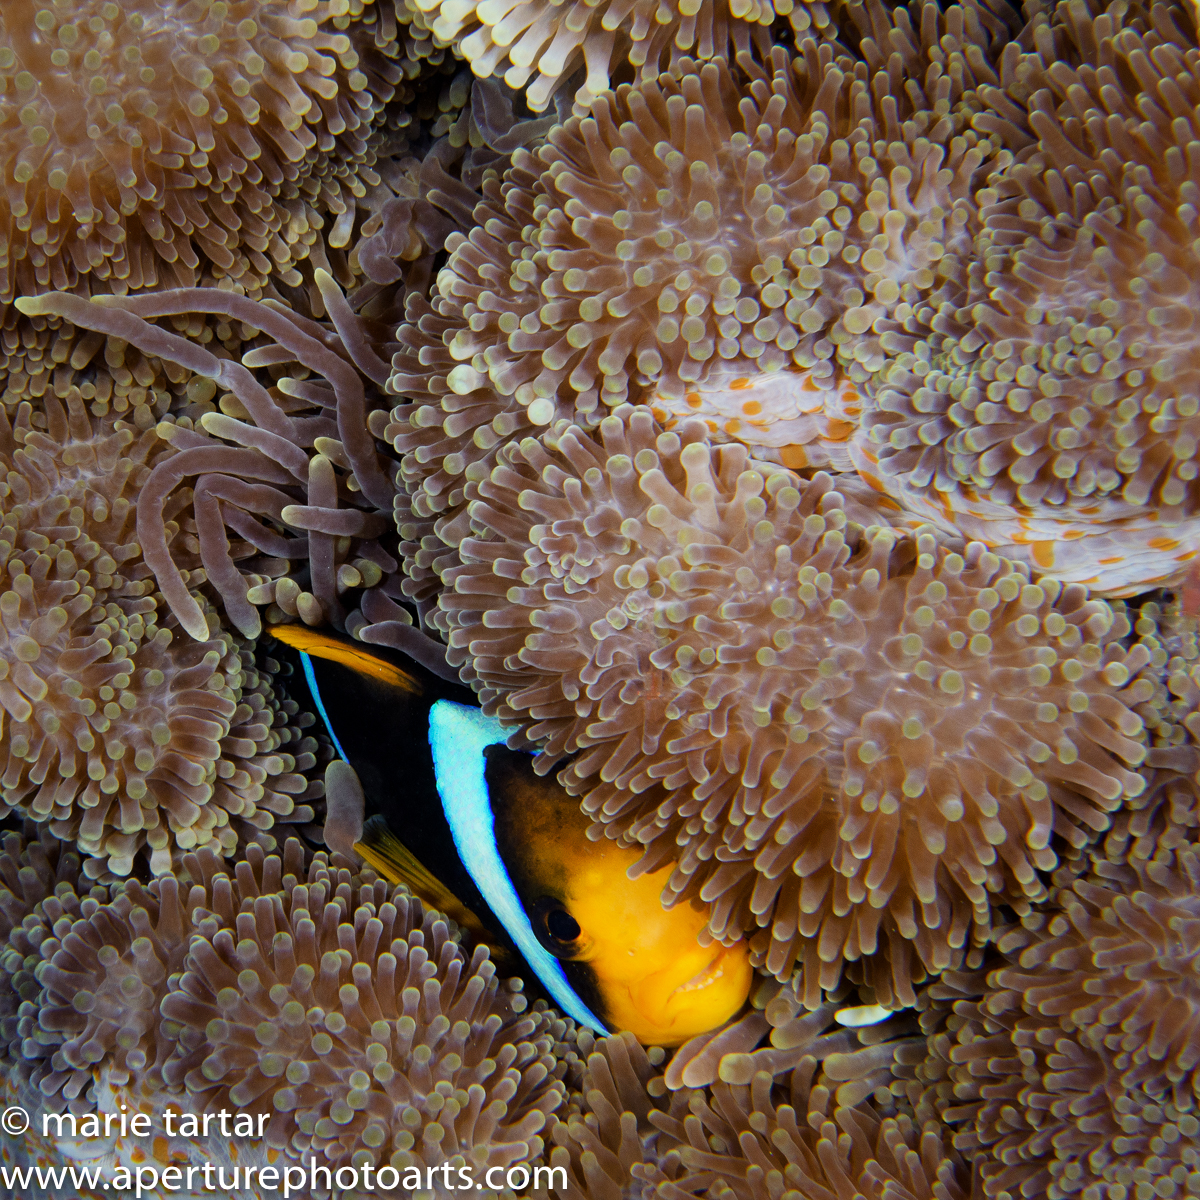 Anemonefish tucked into anemone in Fiji